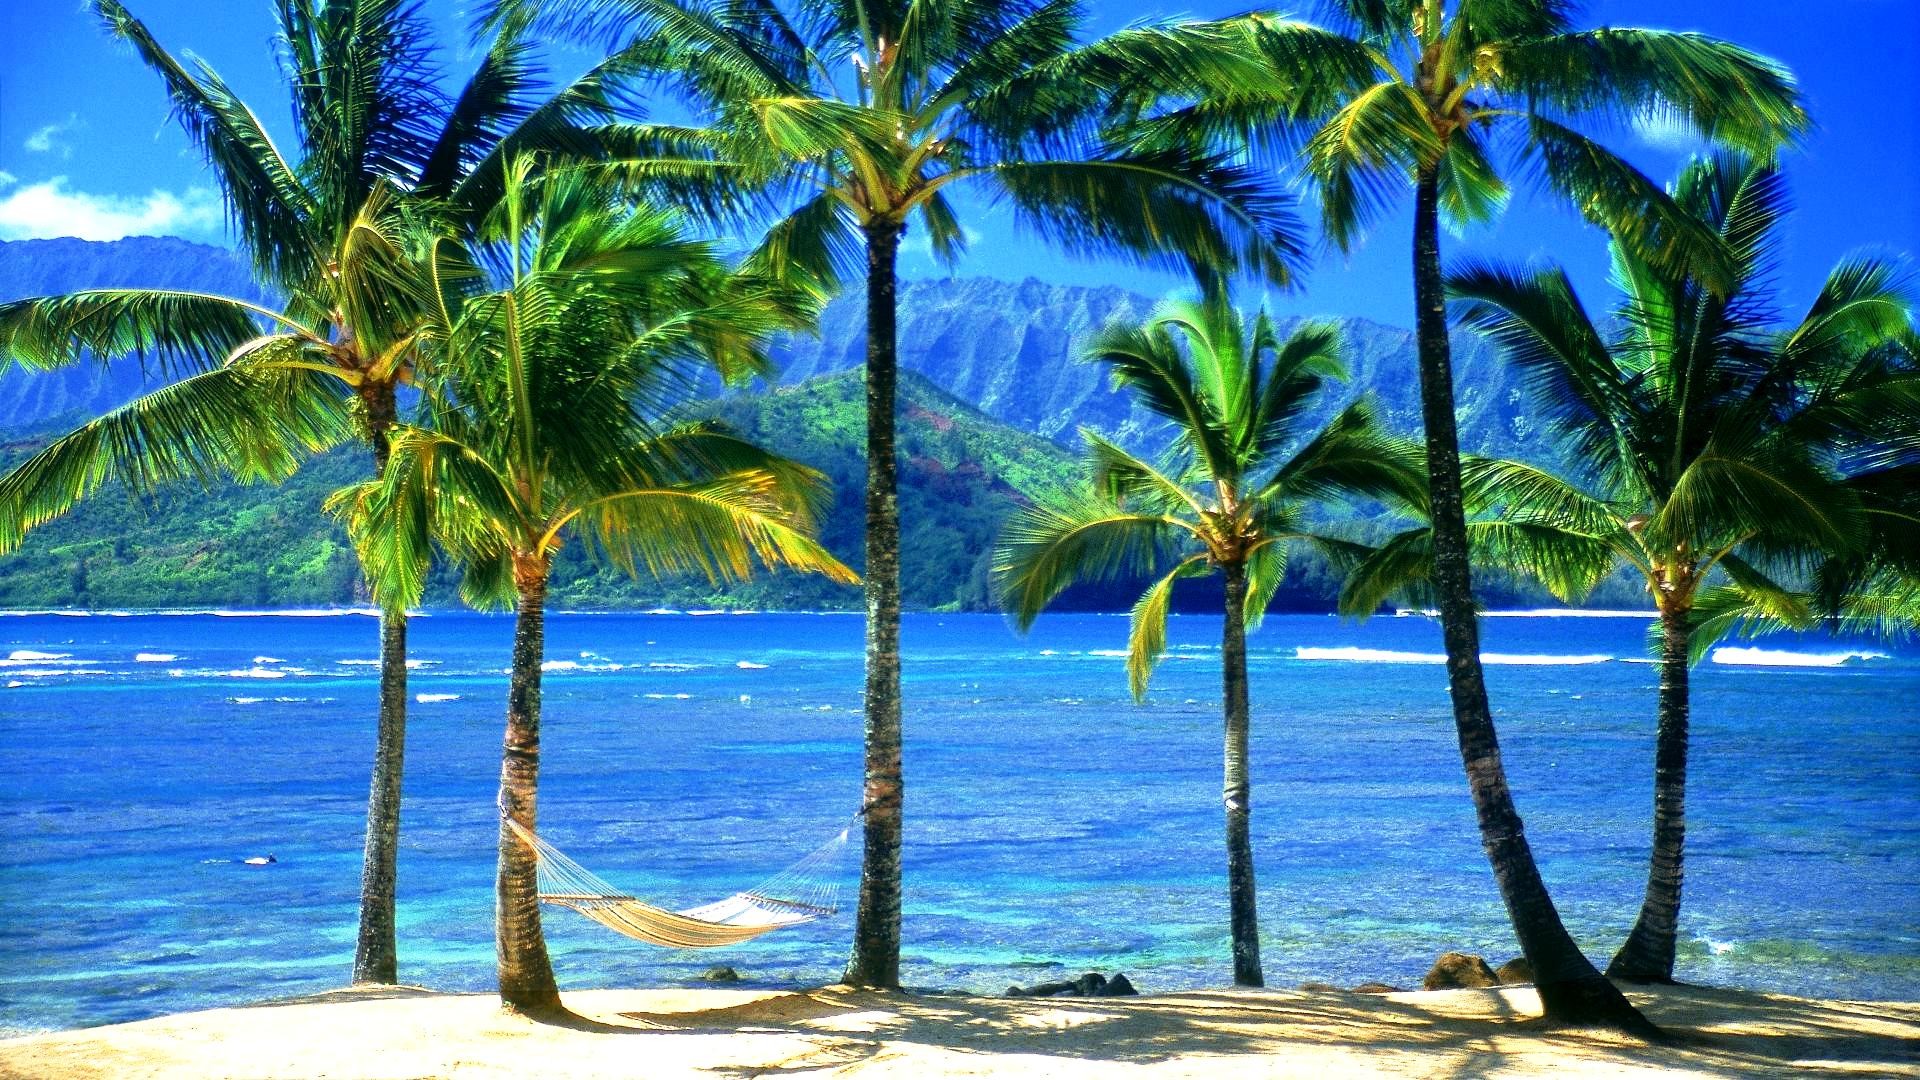 1920x1080  Hawaiian Desktop Wallpaper Hawaii Beach.jpg (1920Ã—1080) Beach